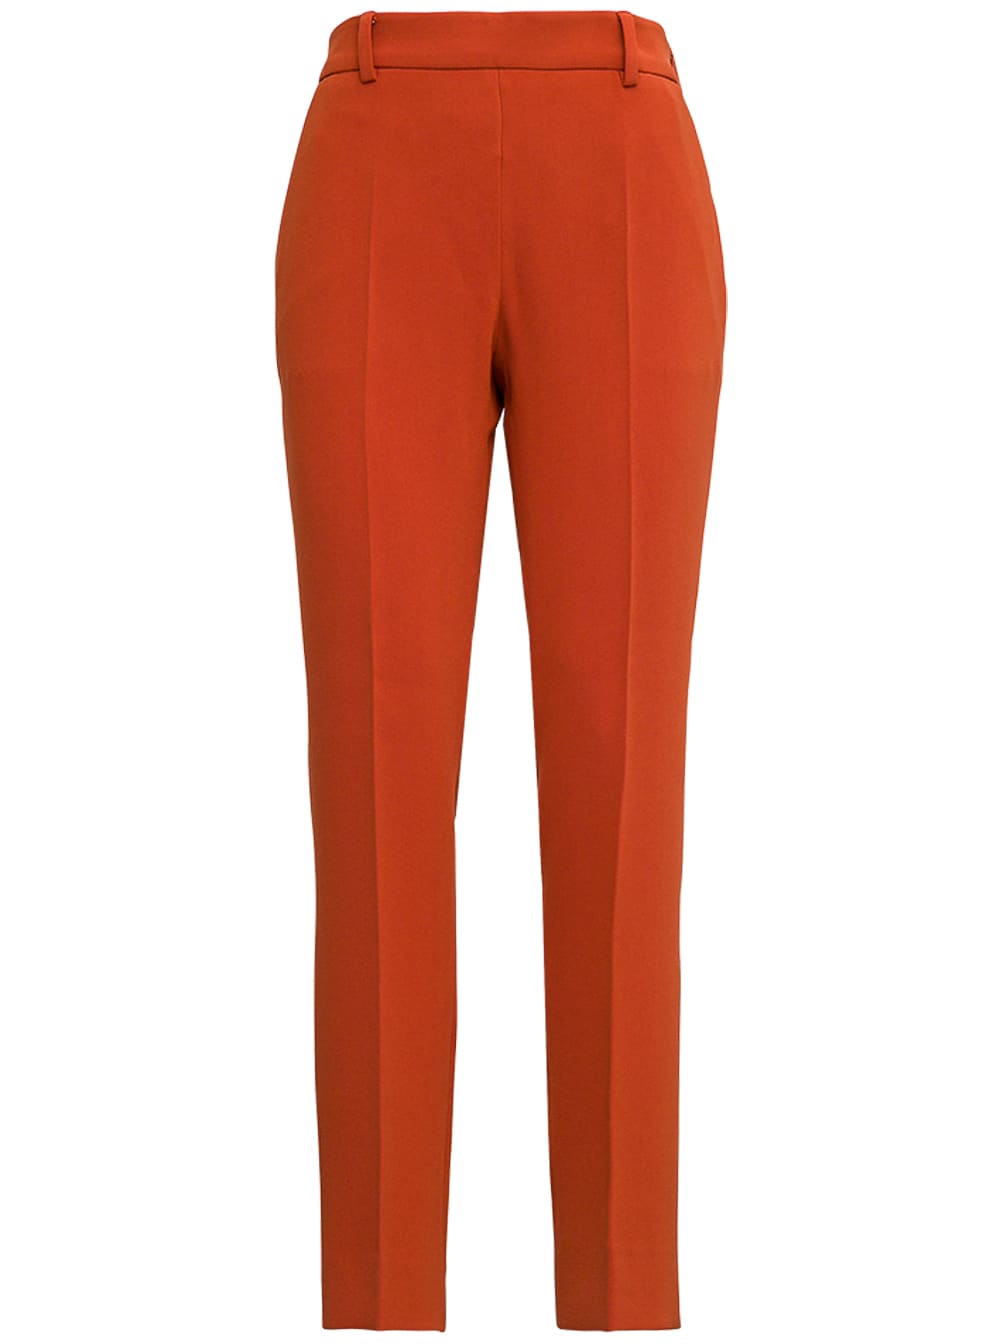 Alberto Biani Orange Cady Pants With Drawstring